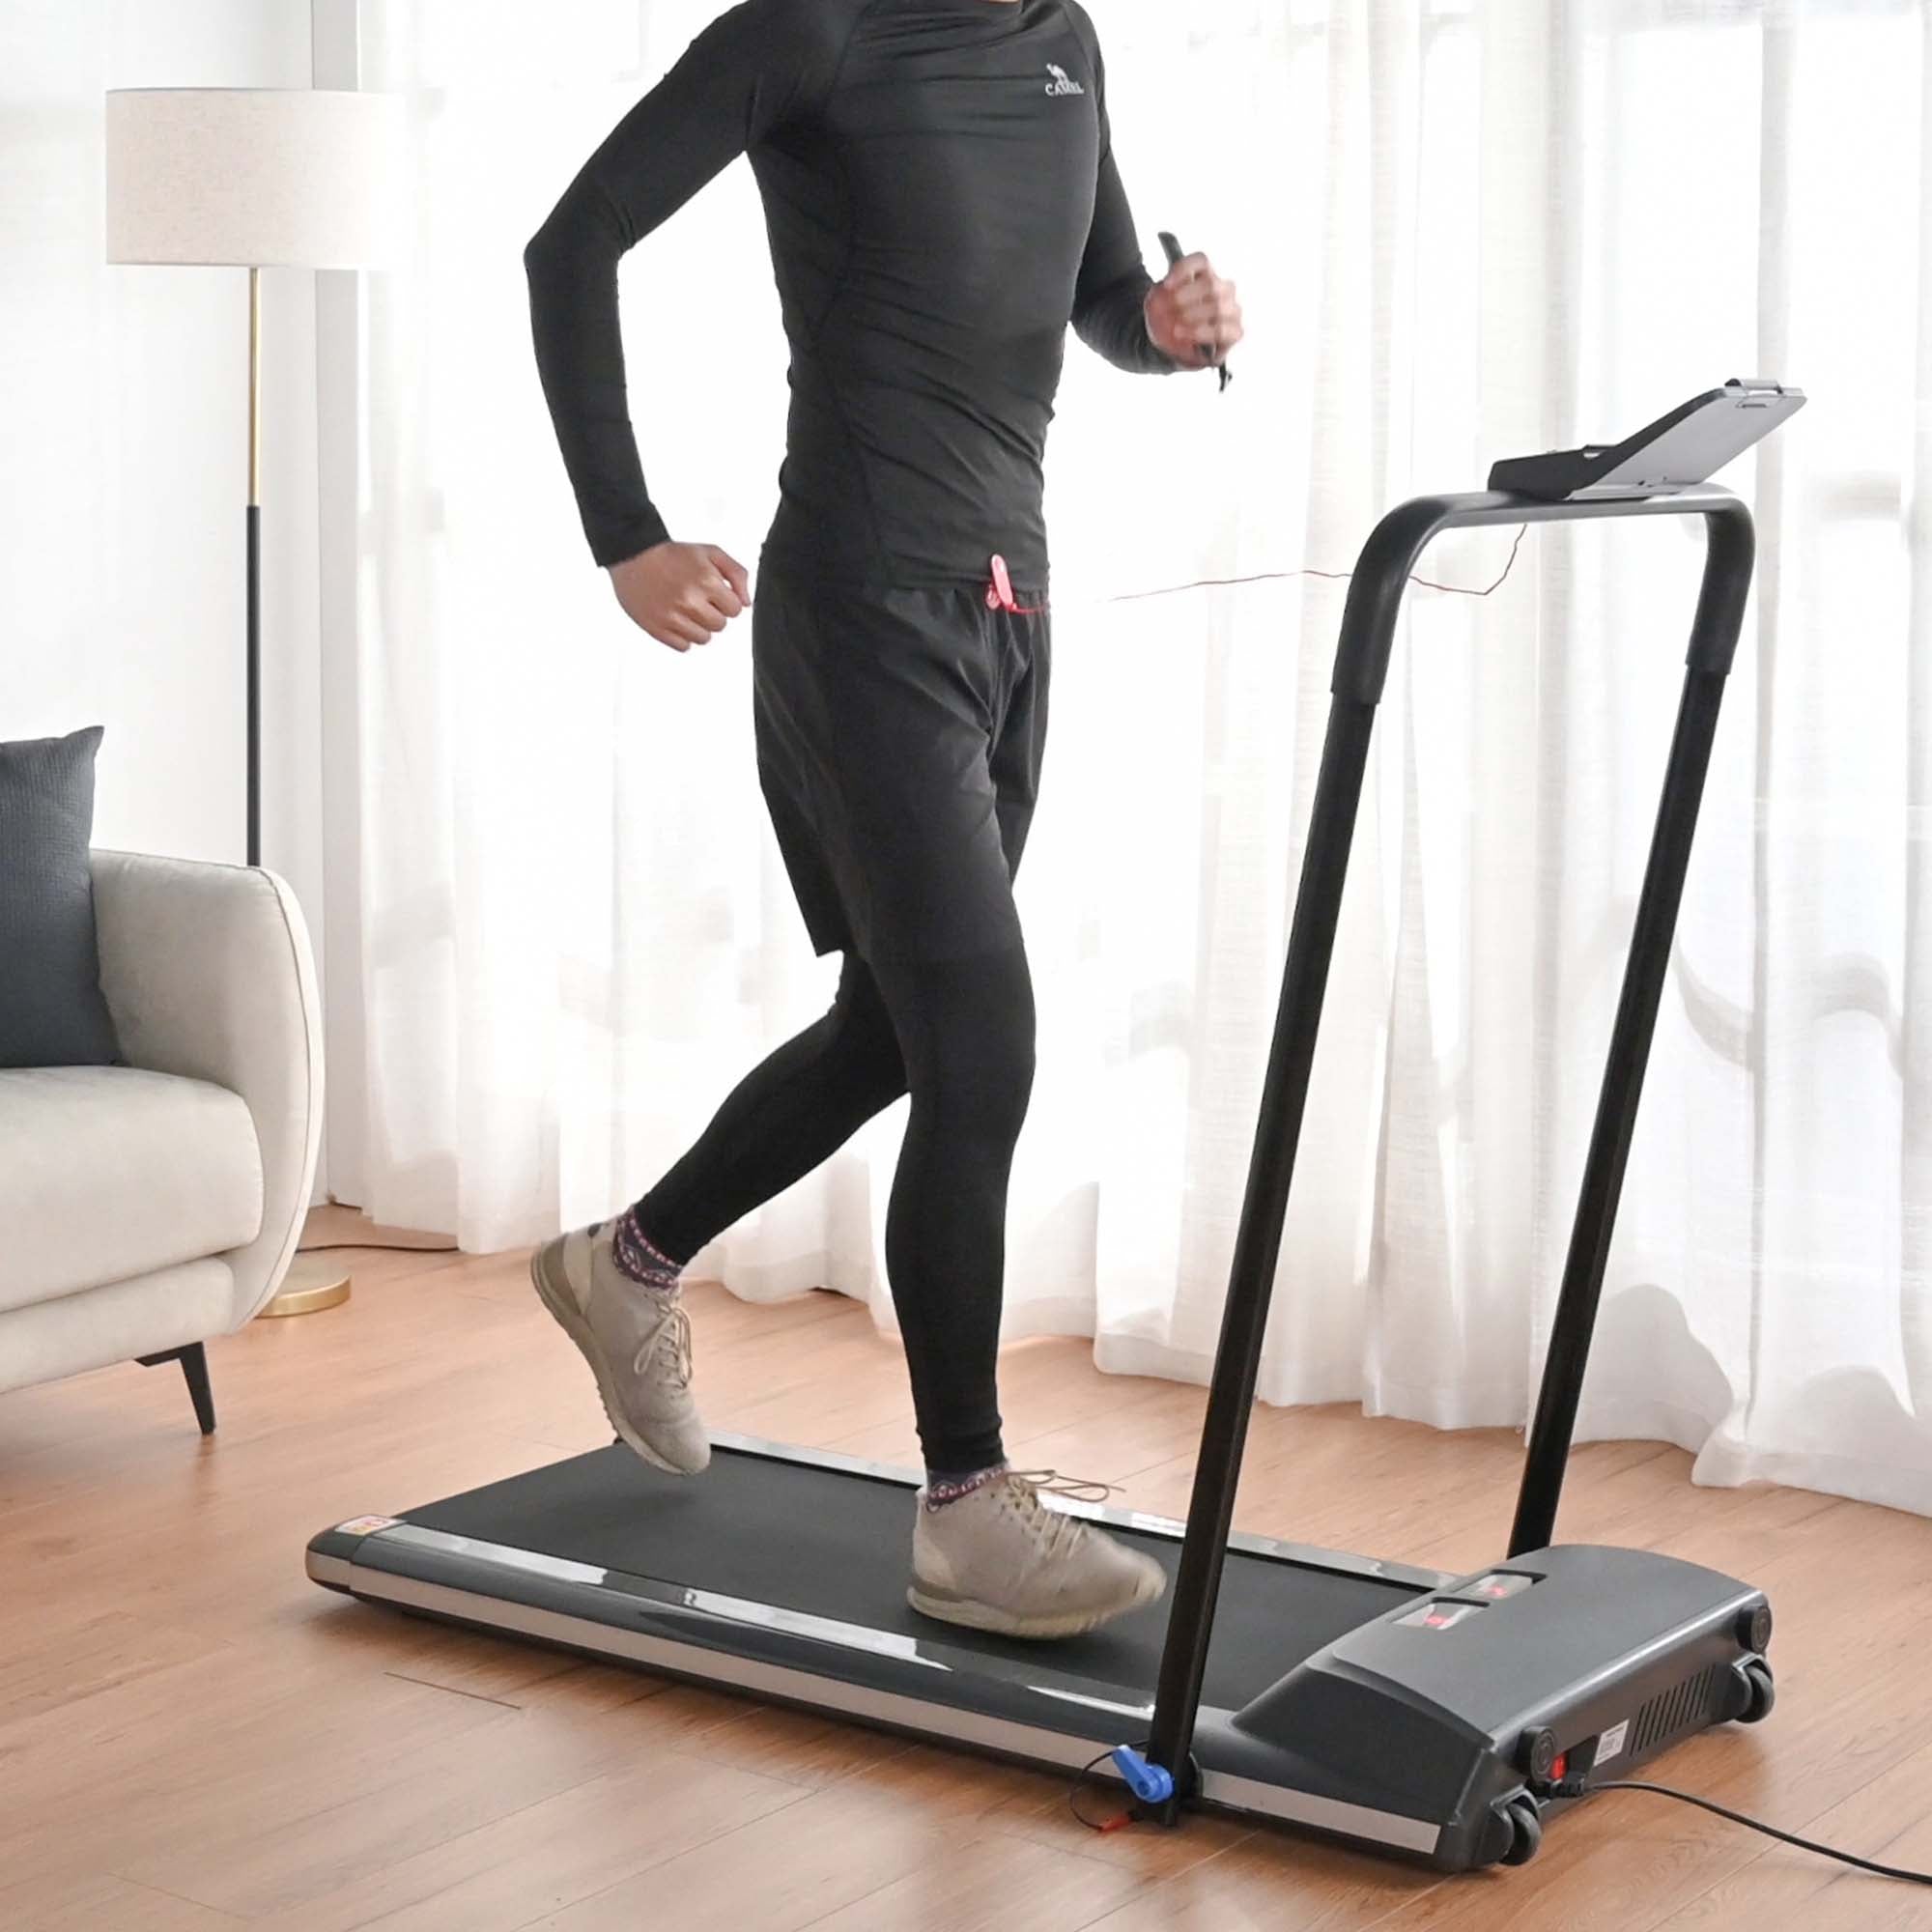 Yescom Underdesk Treadmill Walking Pad with Handrail Remote 1.5 HP